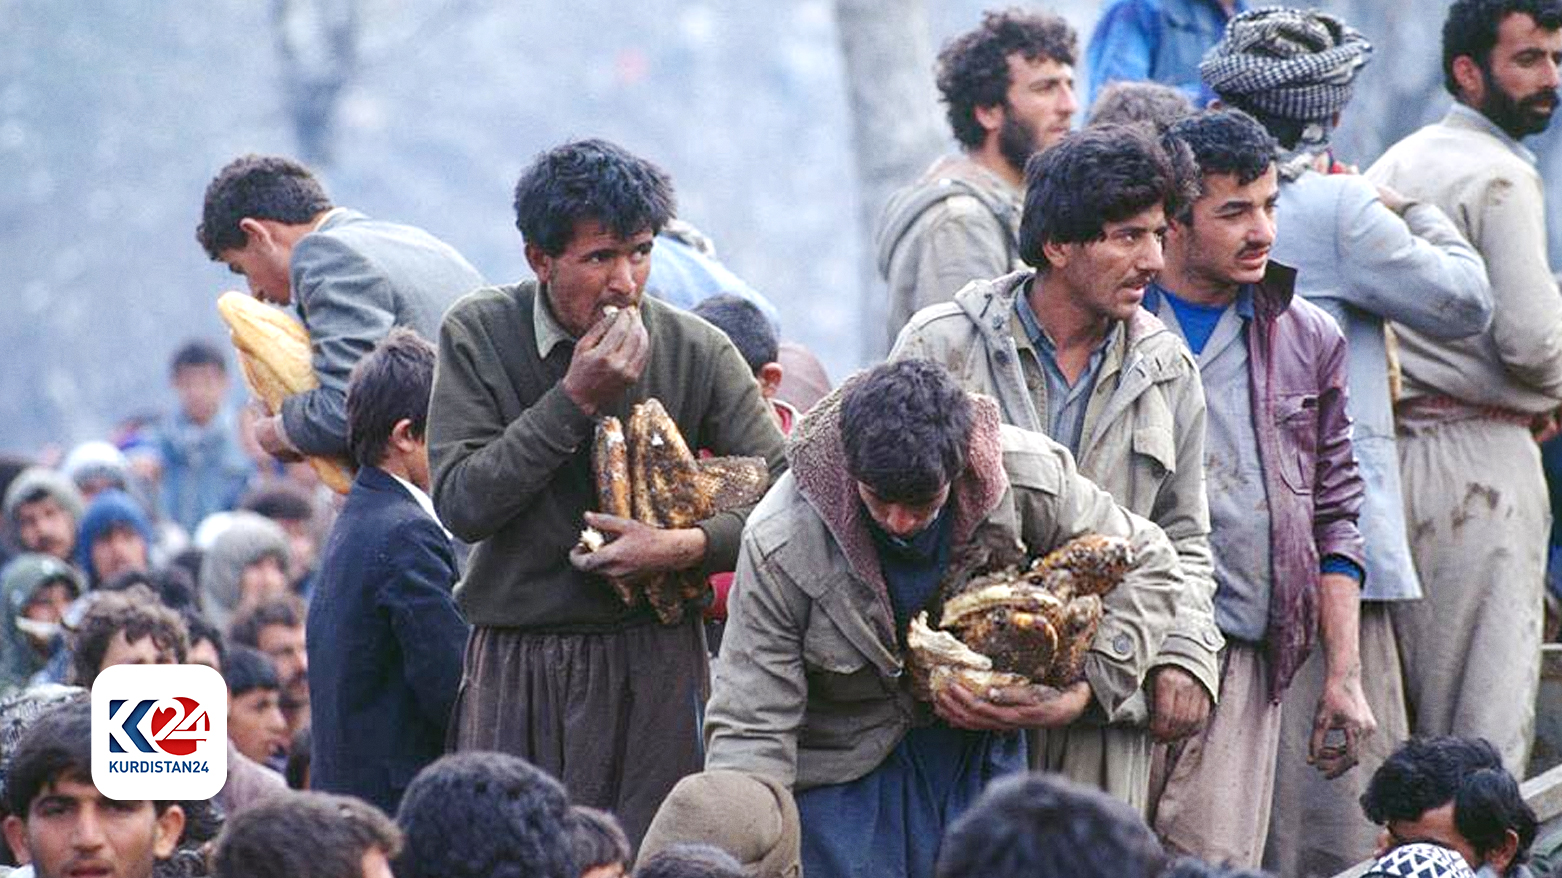 The photo depicts the mass migration. (Photo: Kurdistan 24)